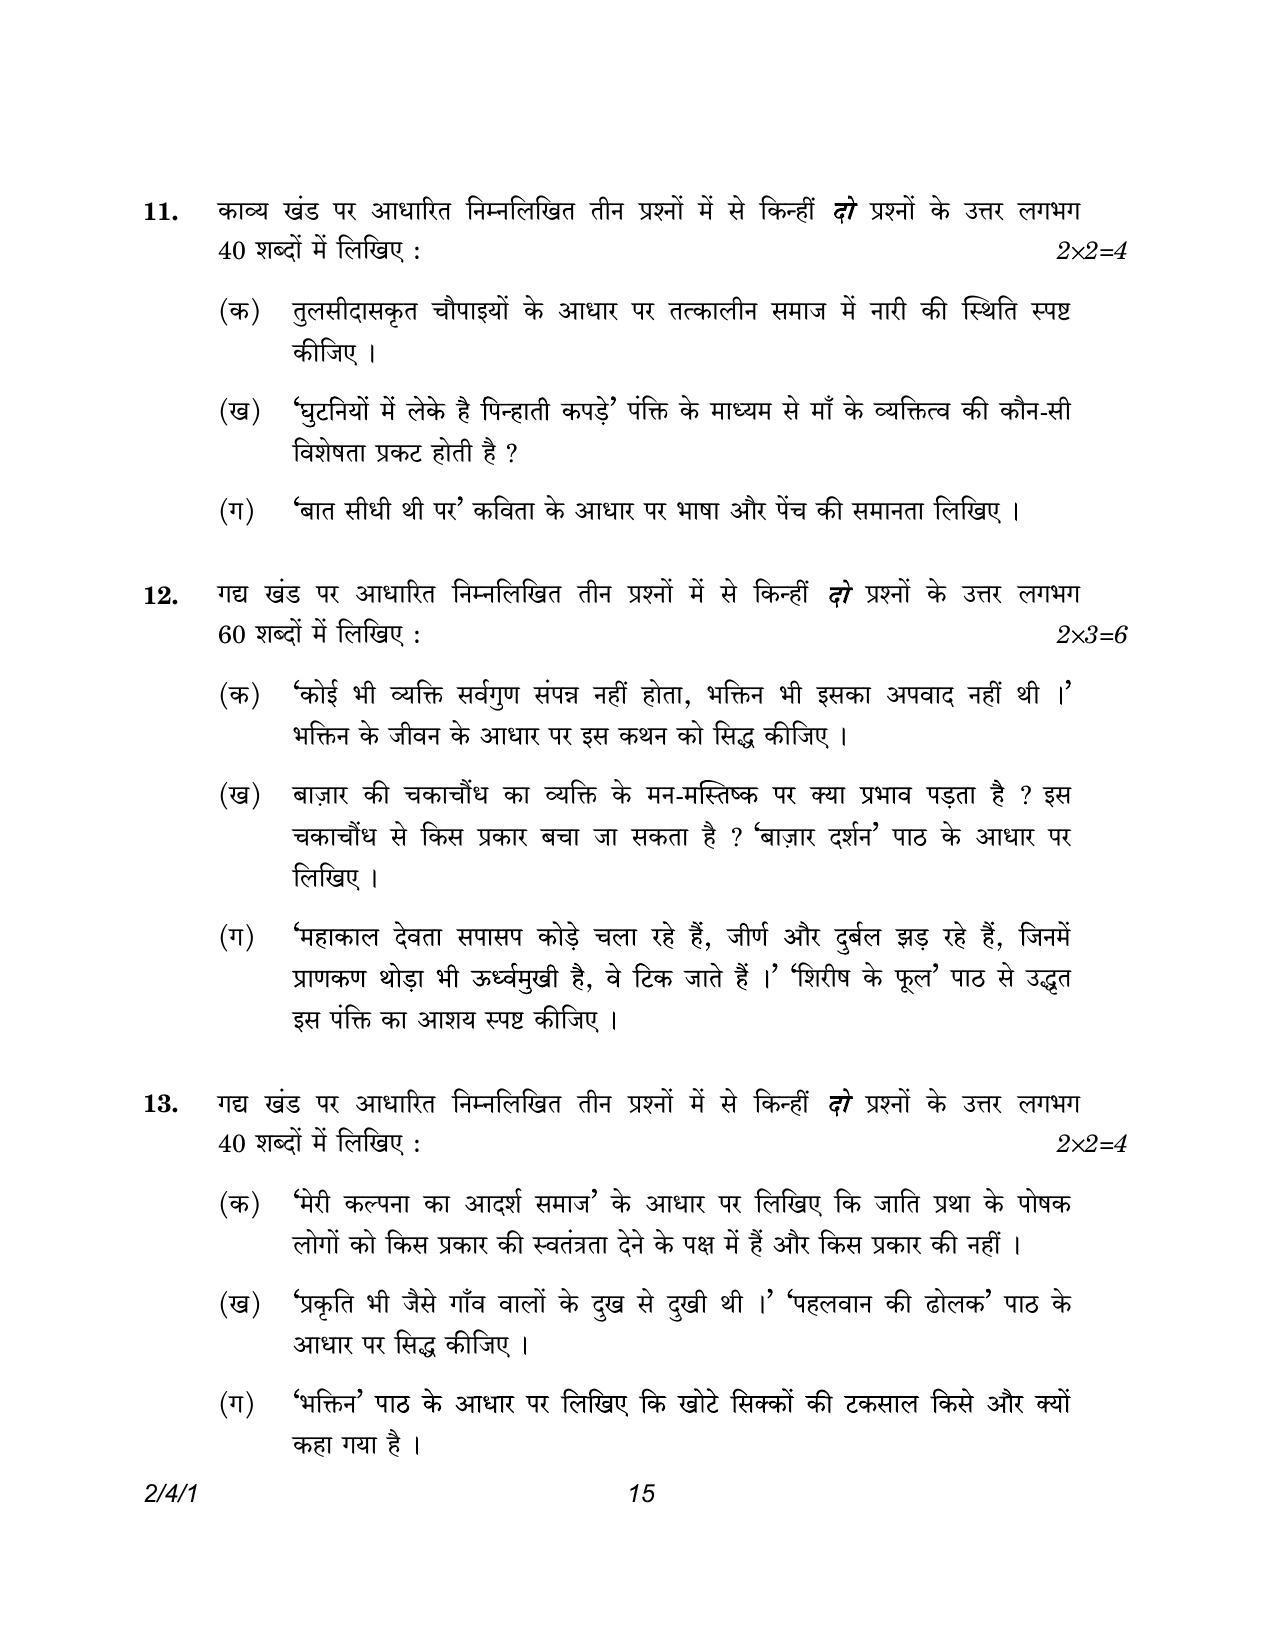 CBSE Class 12 2-4-1 Hindi Core version 2023 Question Paper - Page 15